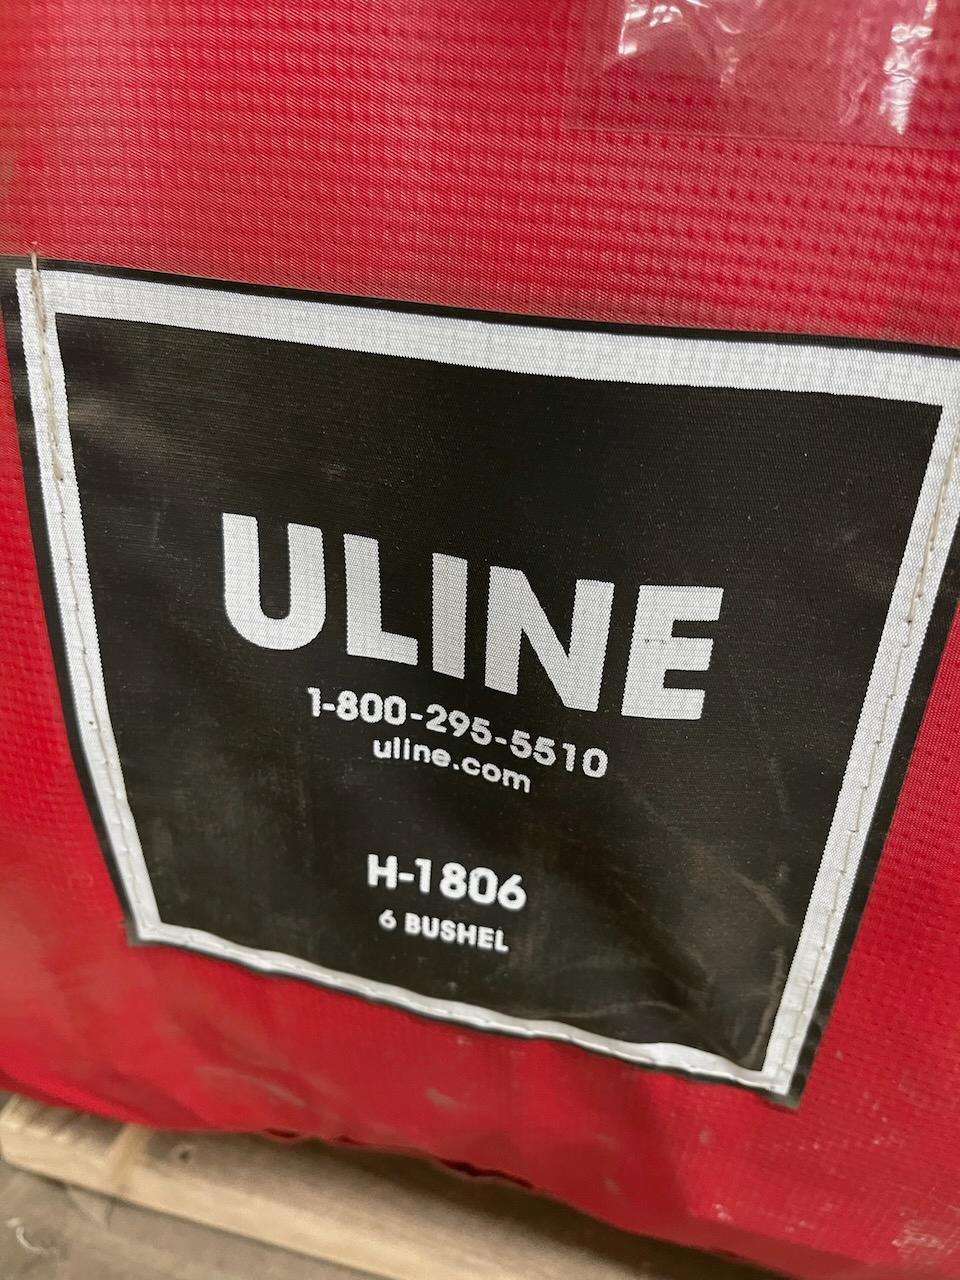 U-Line Vinyl Basket Truck - 6 Bushel, Red, H-1806